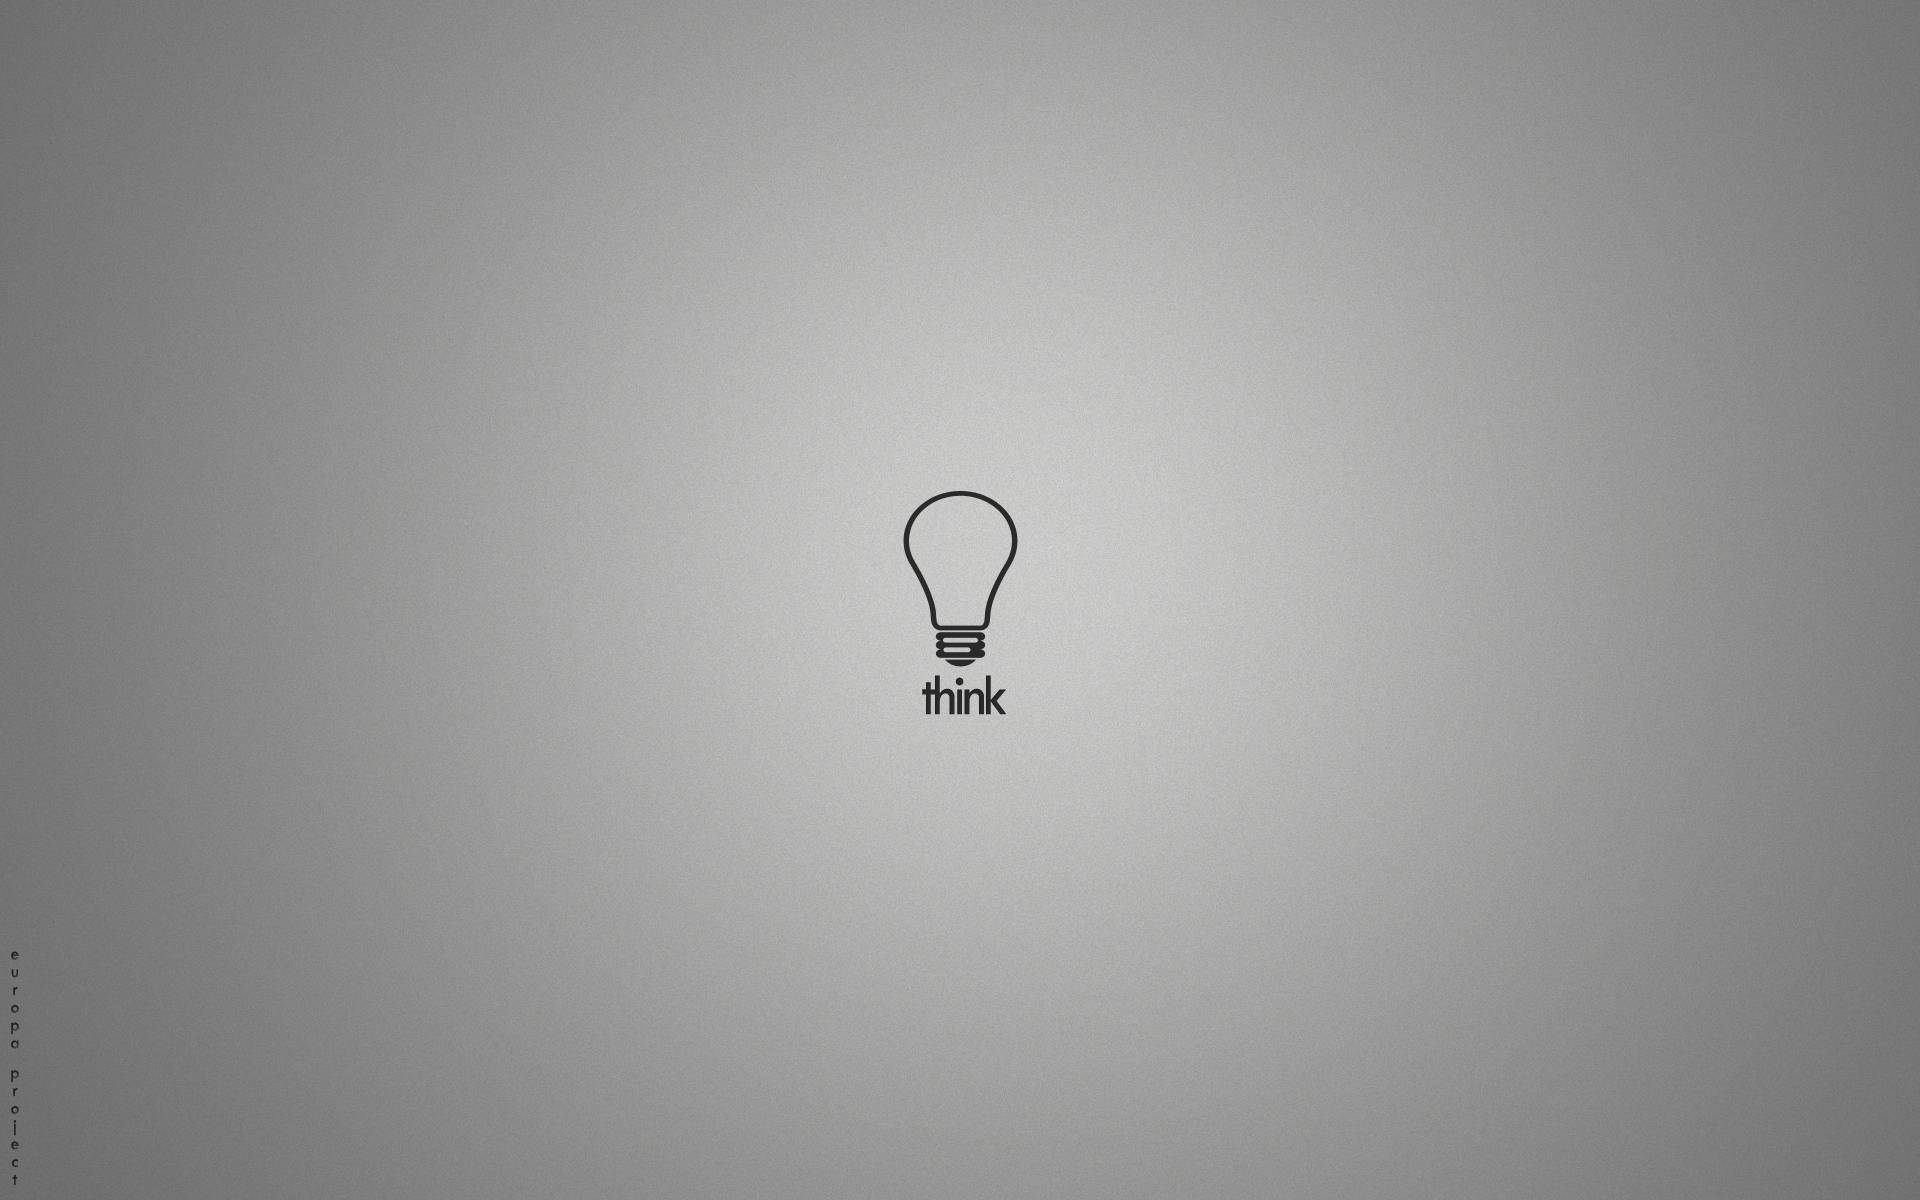 دانلود رایگان عکس زمینه خوشگل با طرح مینیمال لامپ تفکر